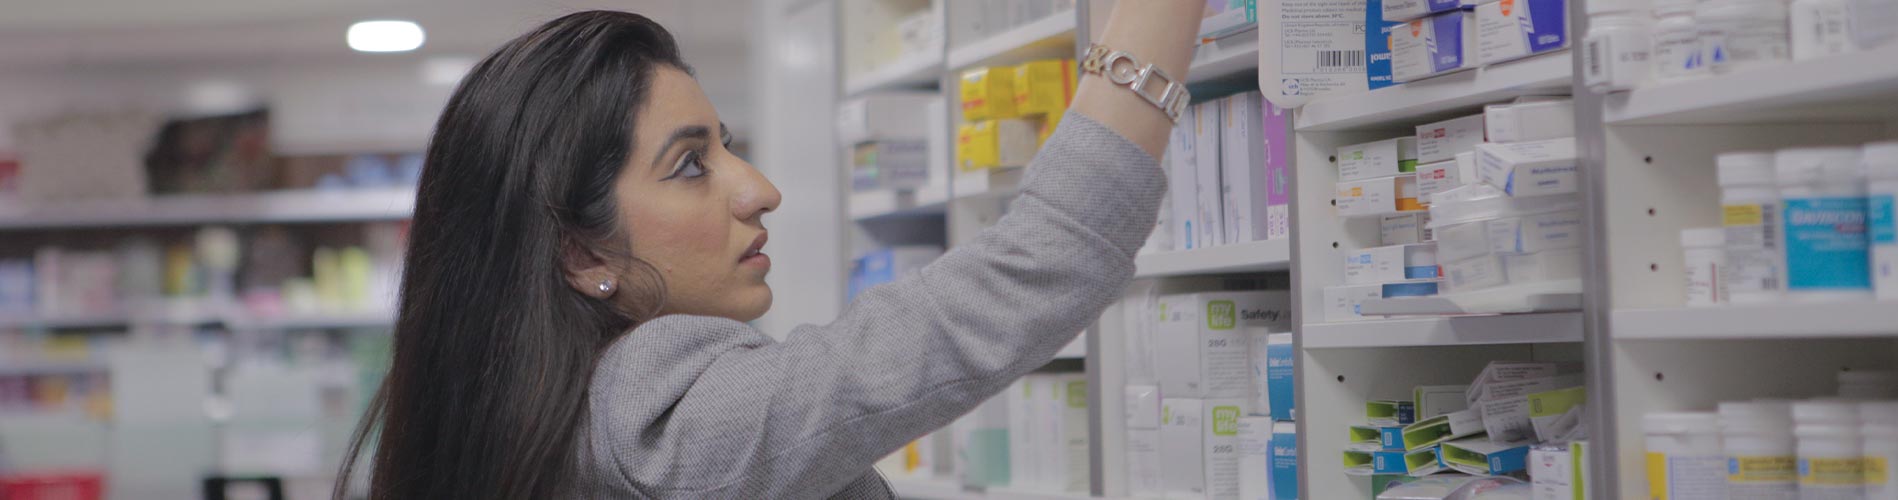 Pharmacist putting medicines on the shelf